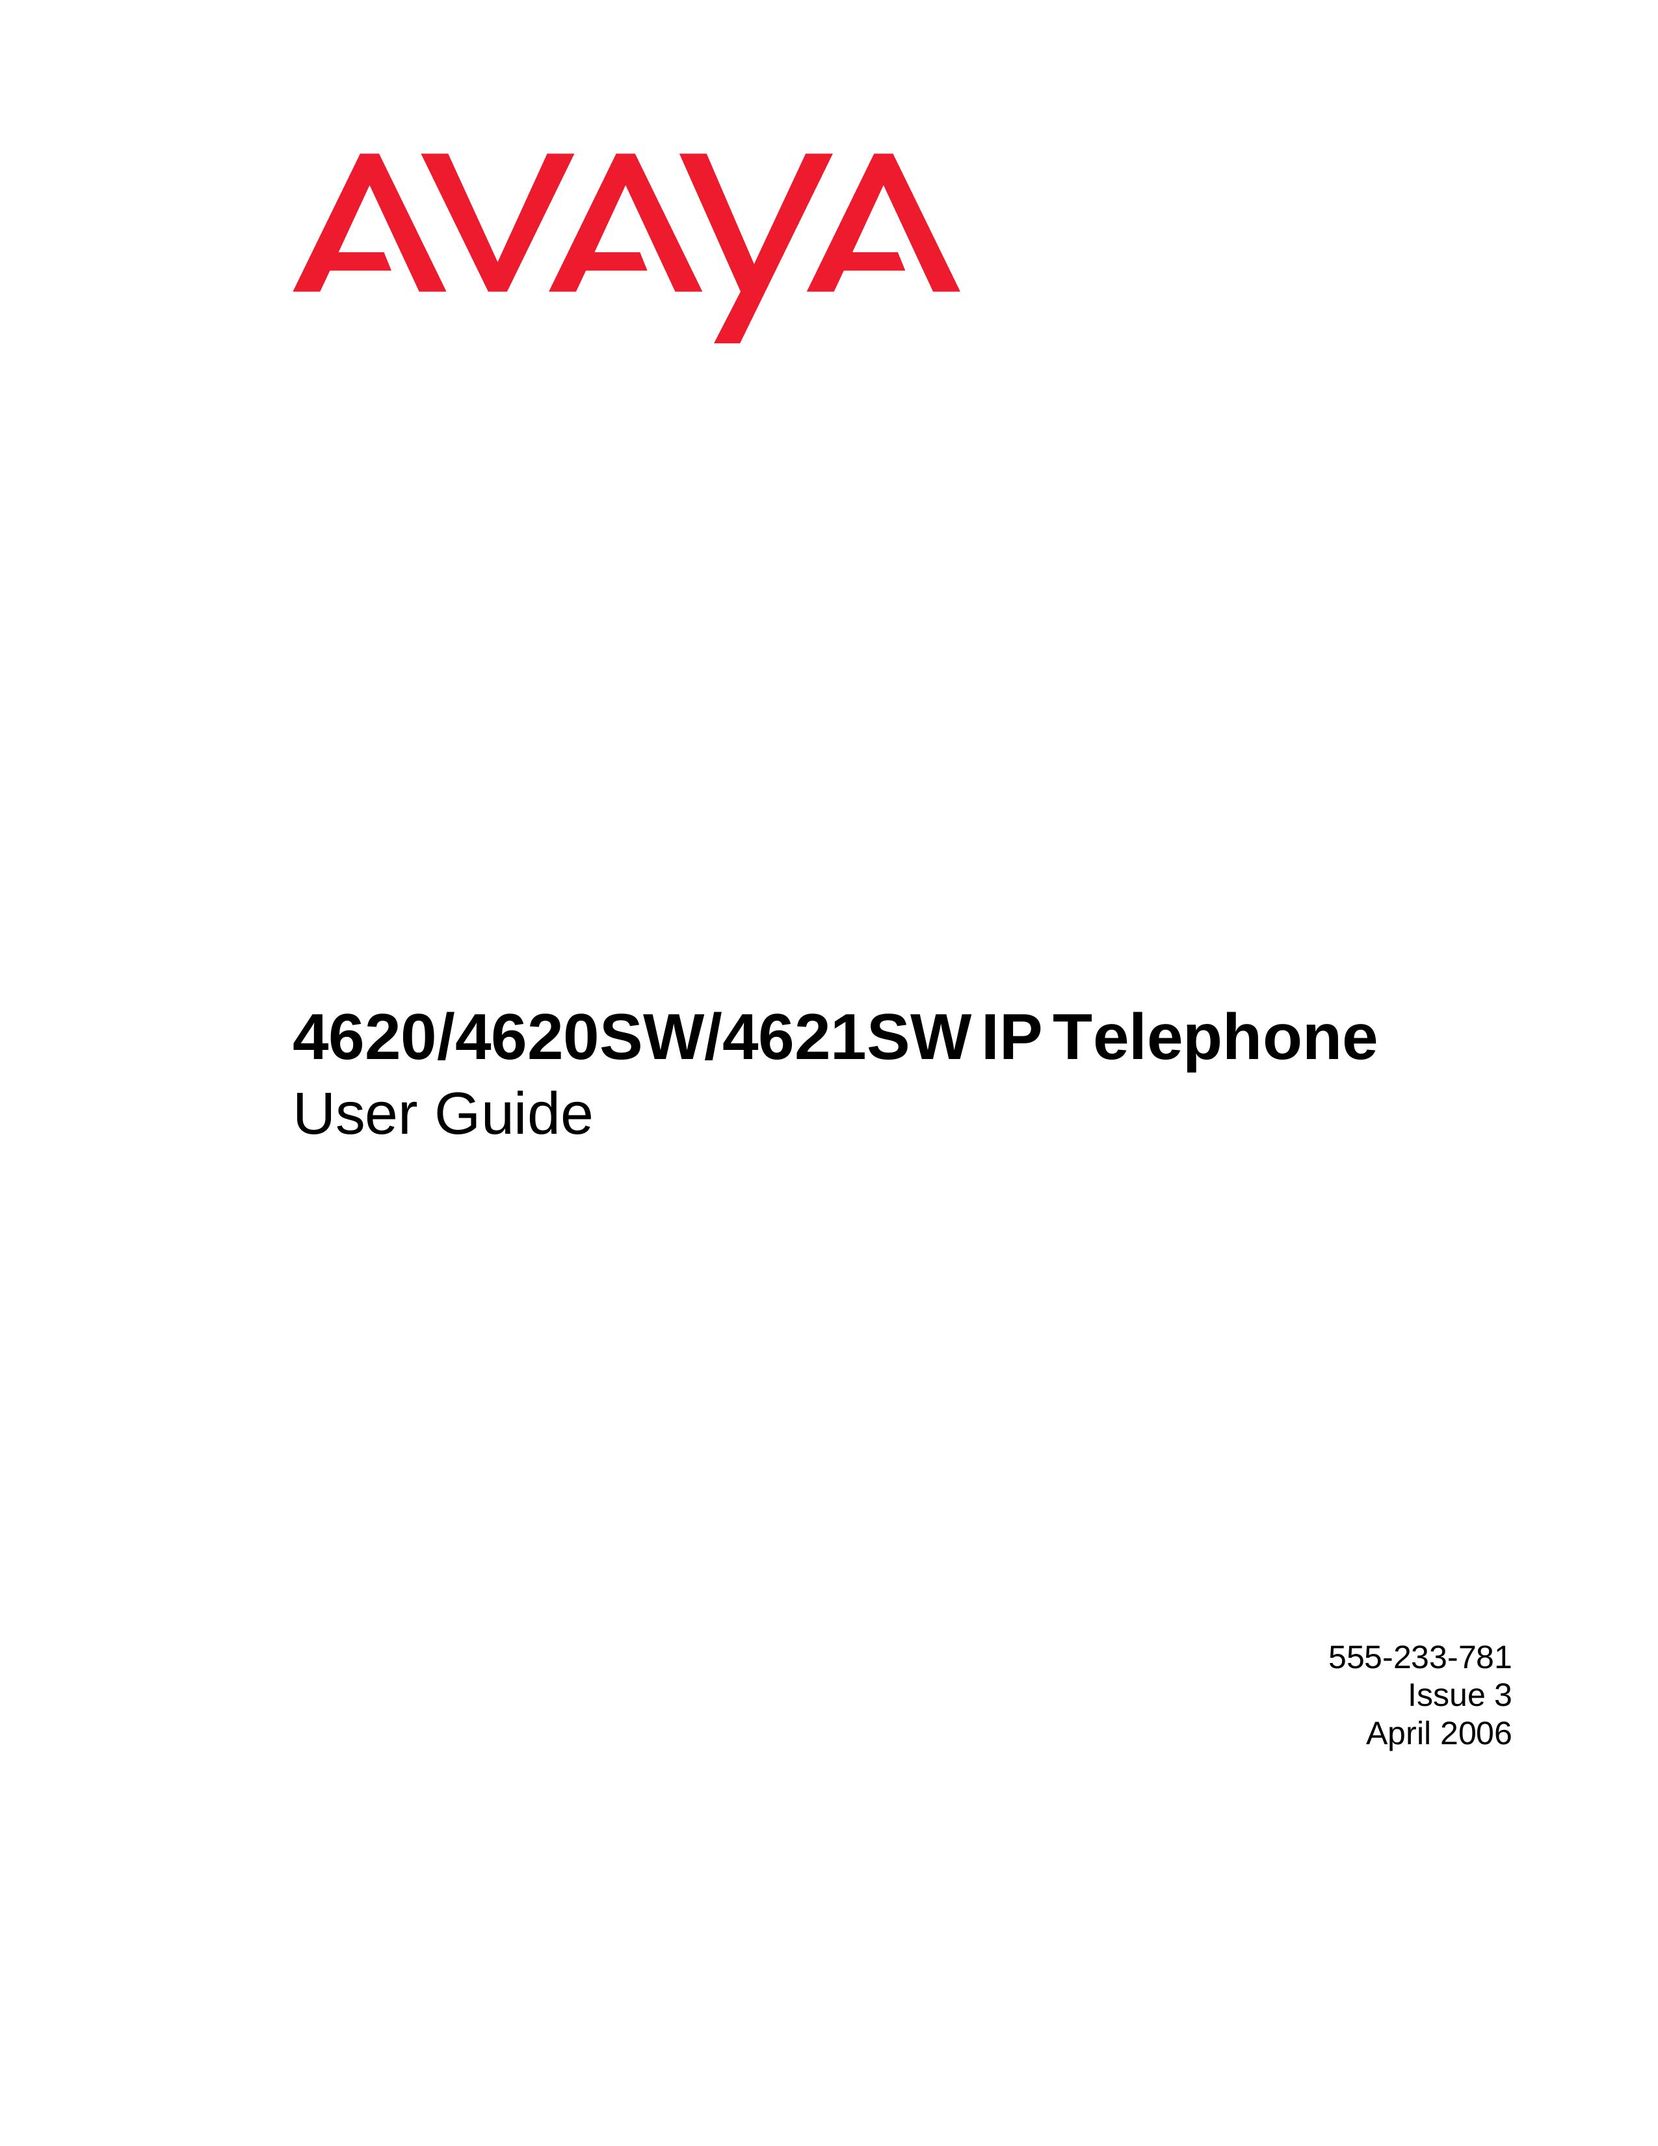 Avaya 4620 Telephone User Manual